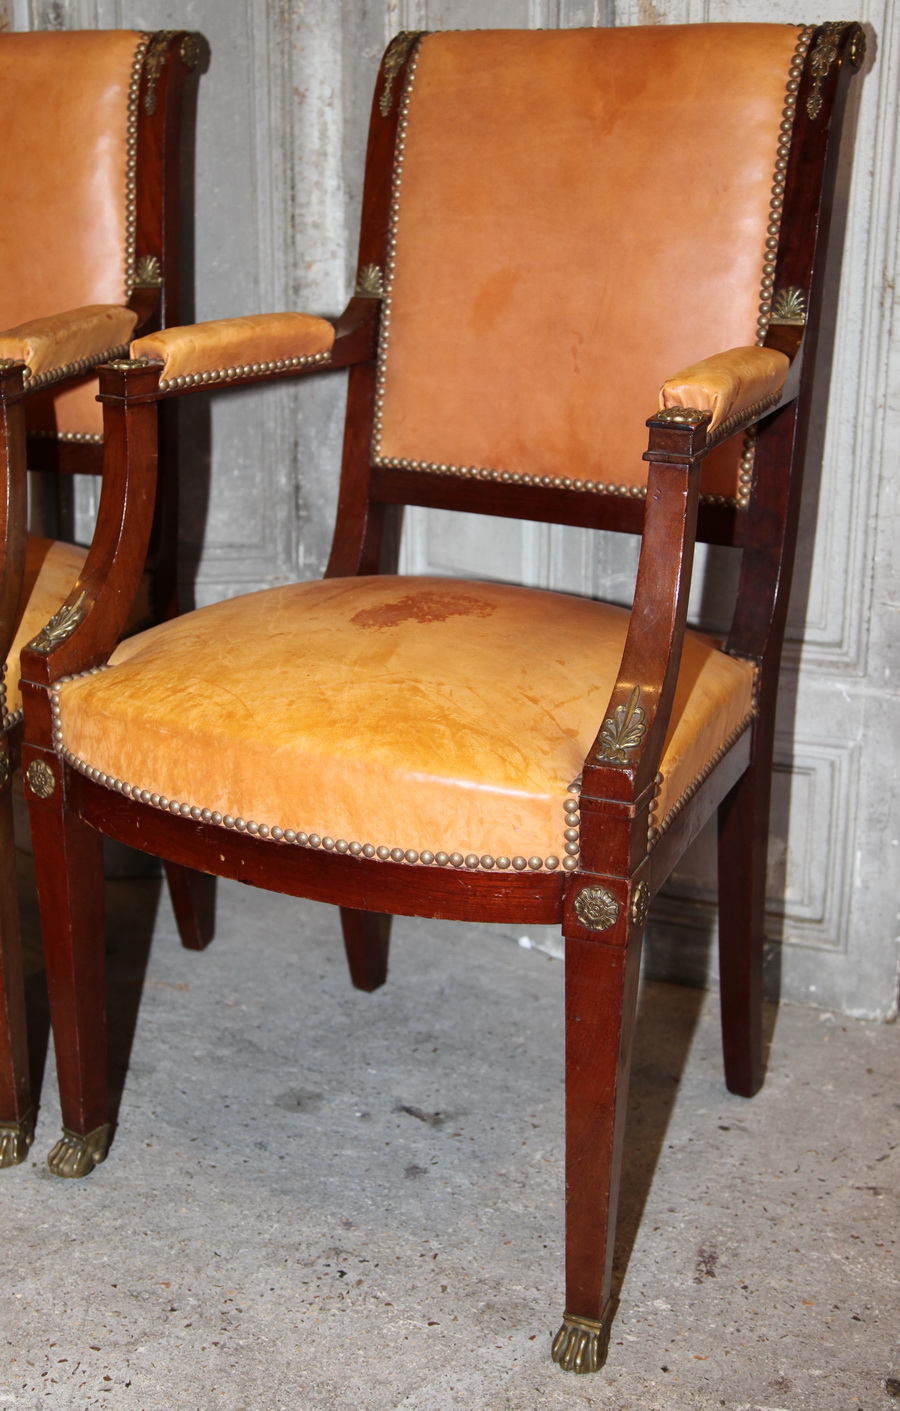 Pair of armchairs CIRCA 1880